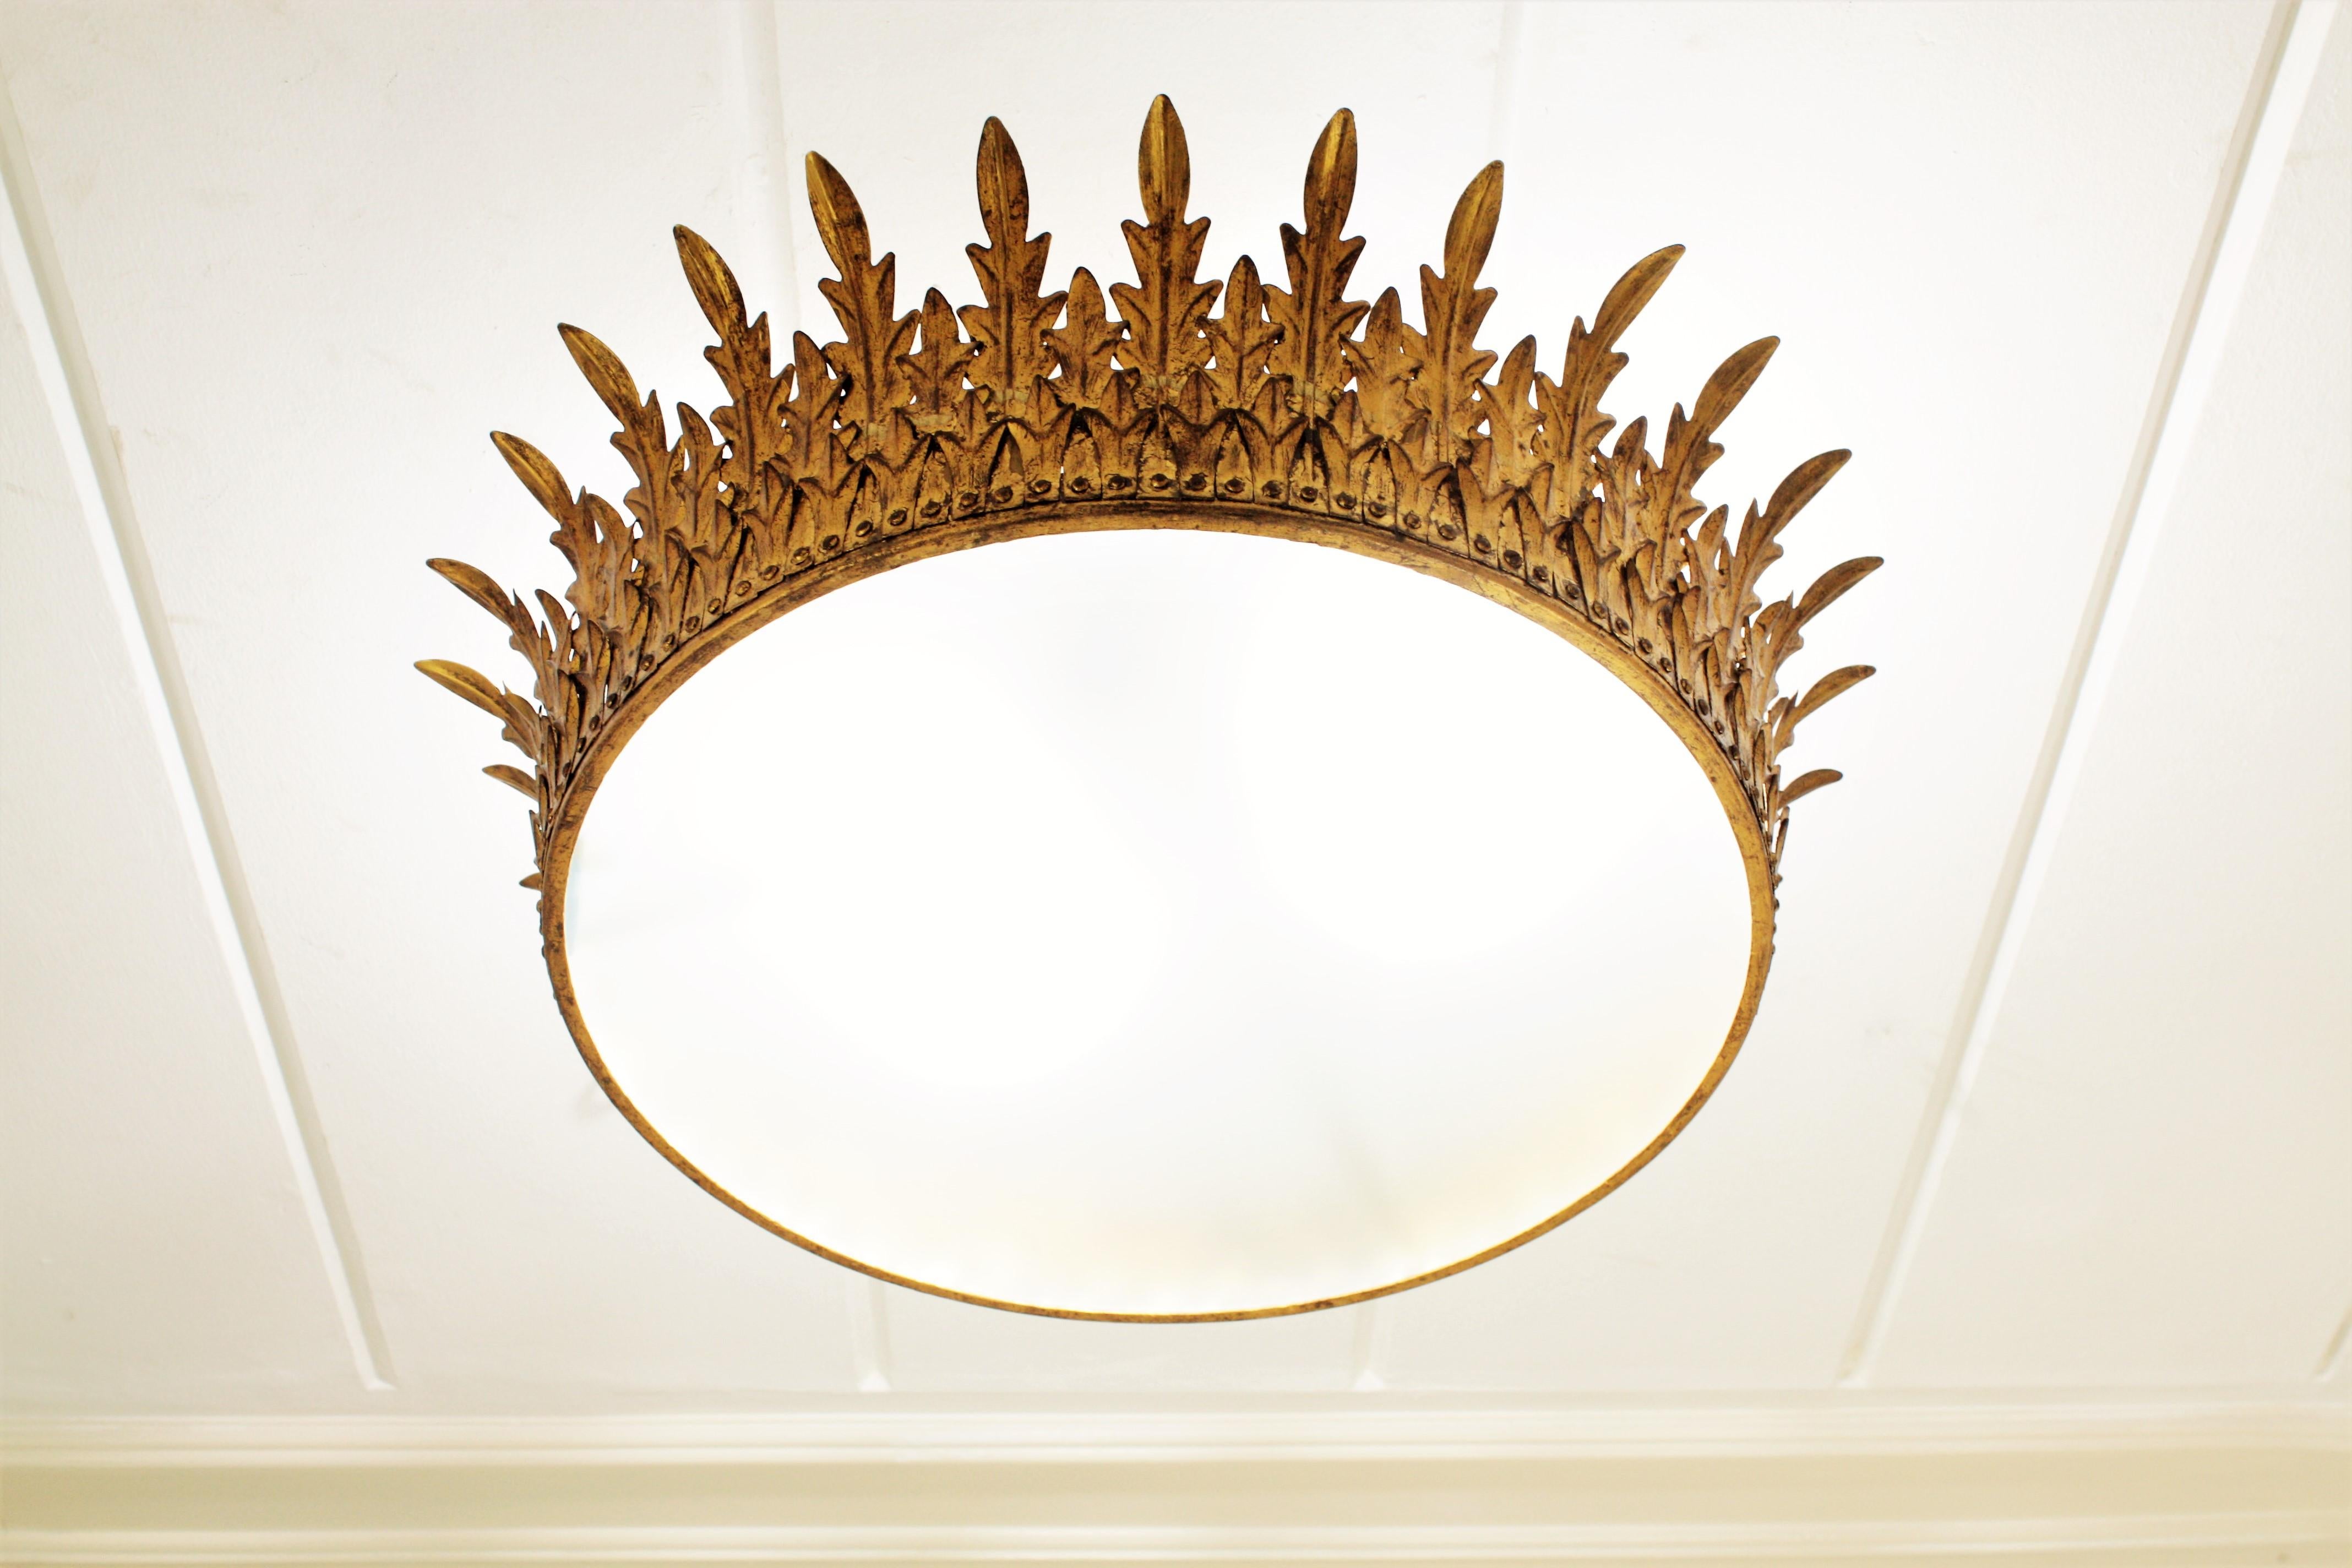 Spanish Extra Large Neoclassical Gilt Iron Sunburst Crown Ceiling Light Fixture 1